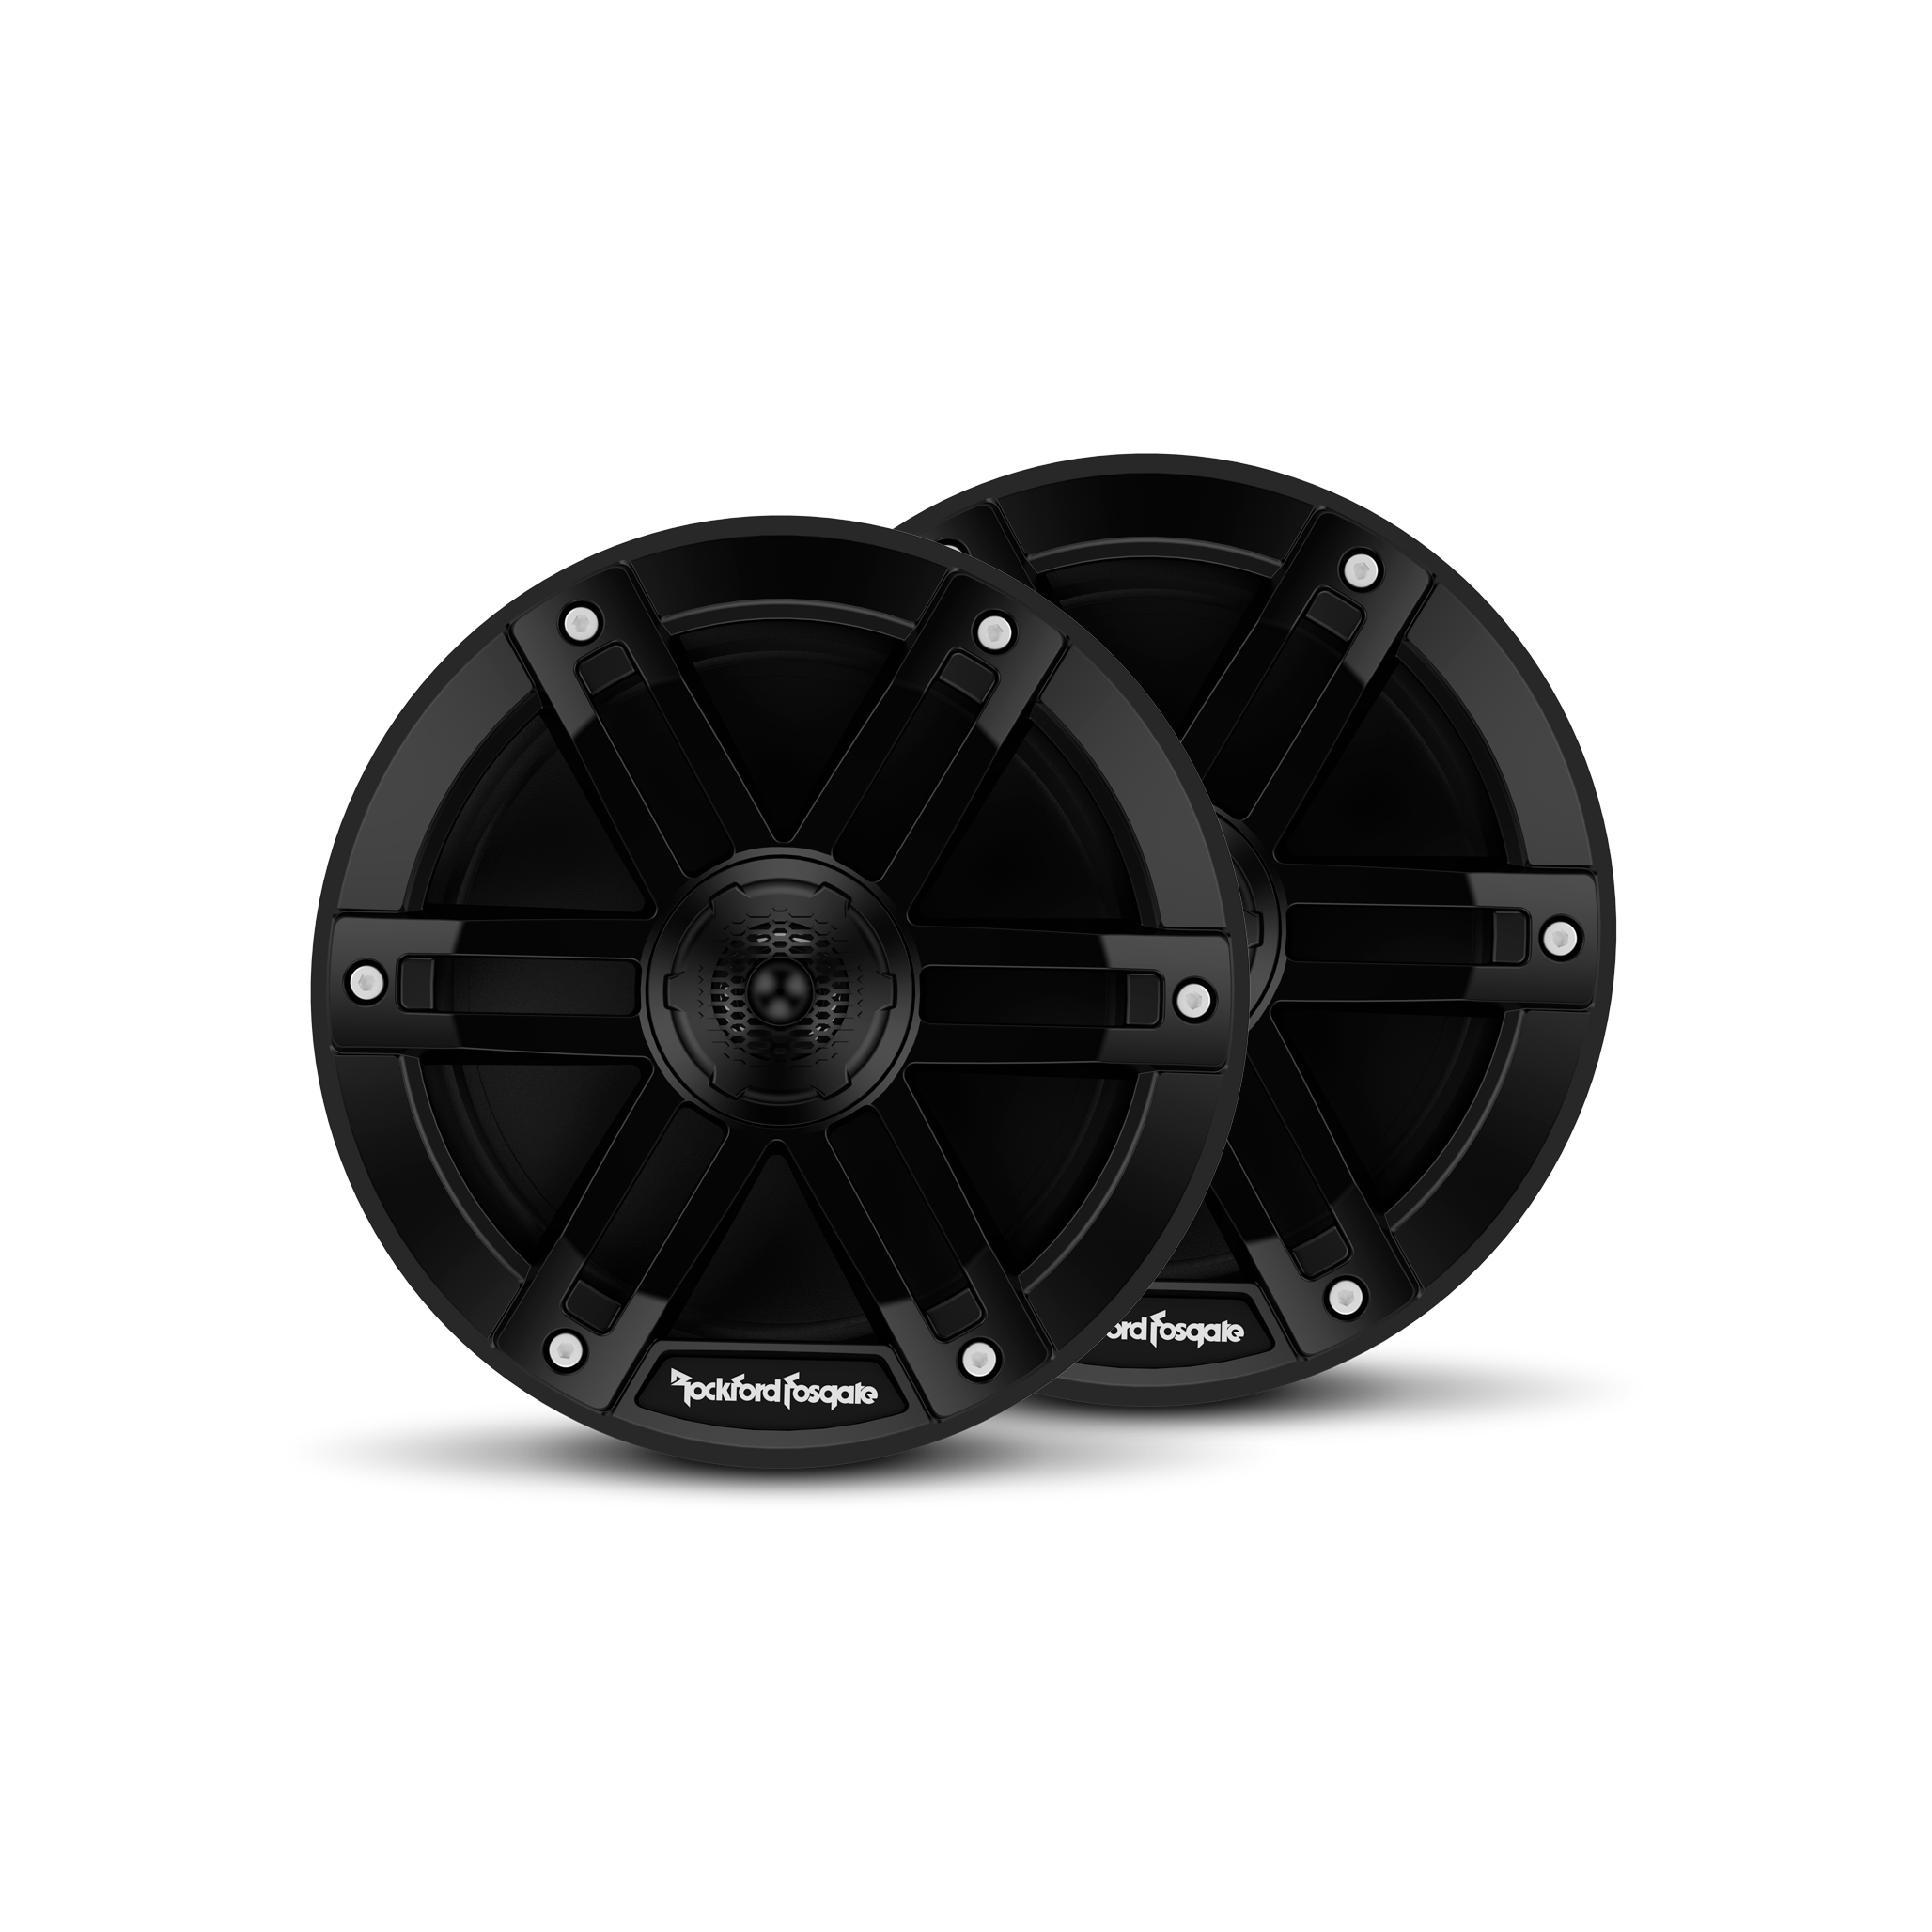 Rockford Fosgate M0 6.5" Marine Speakers Black Pair